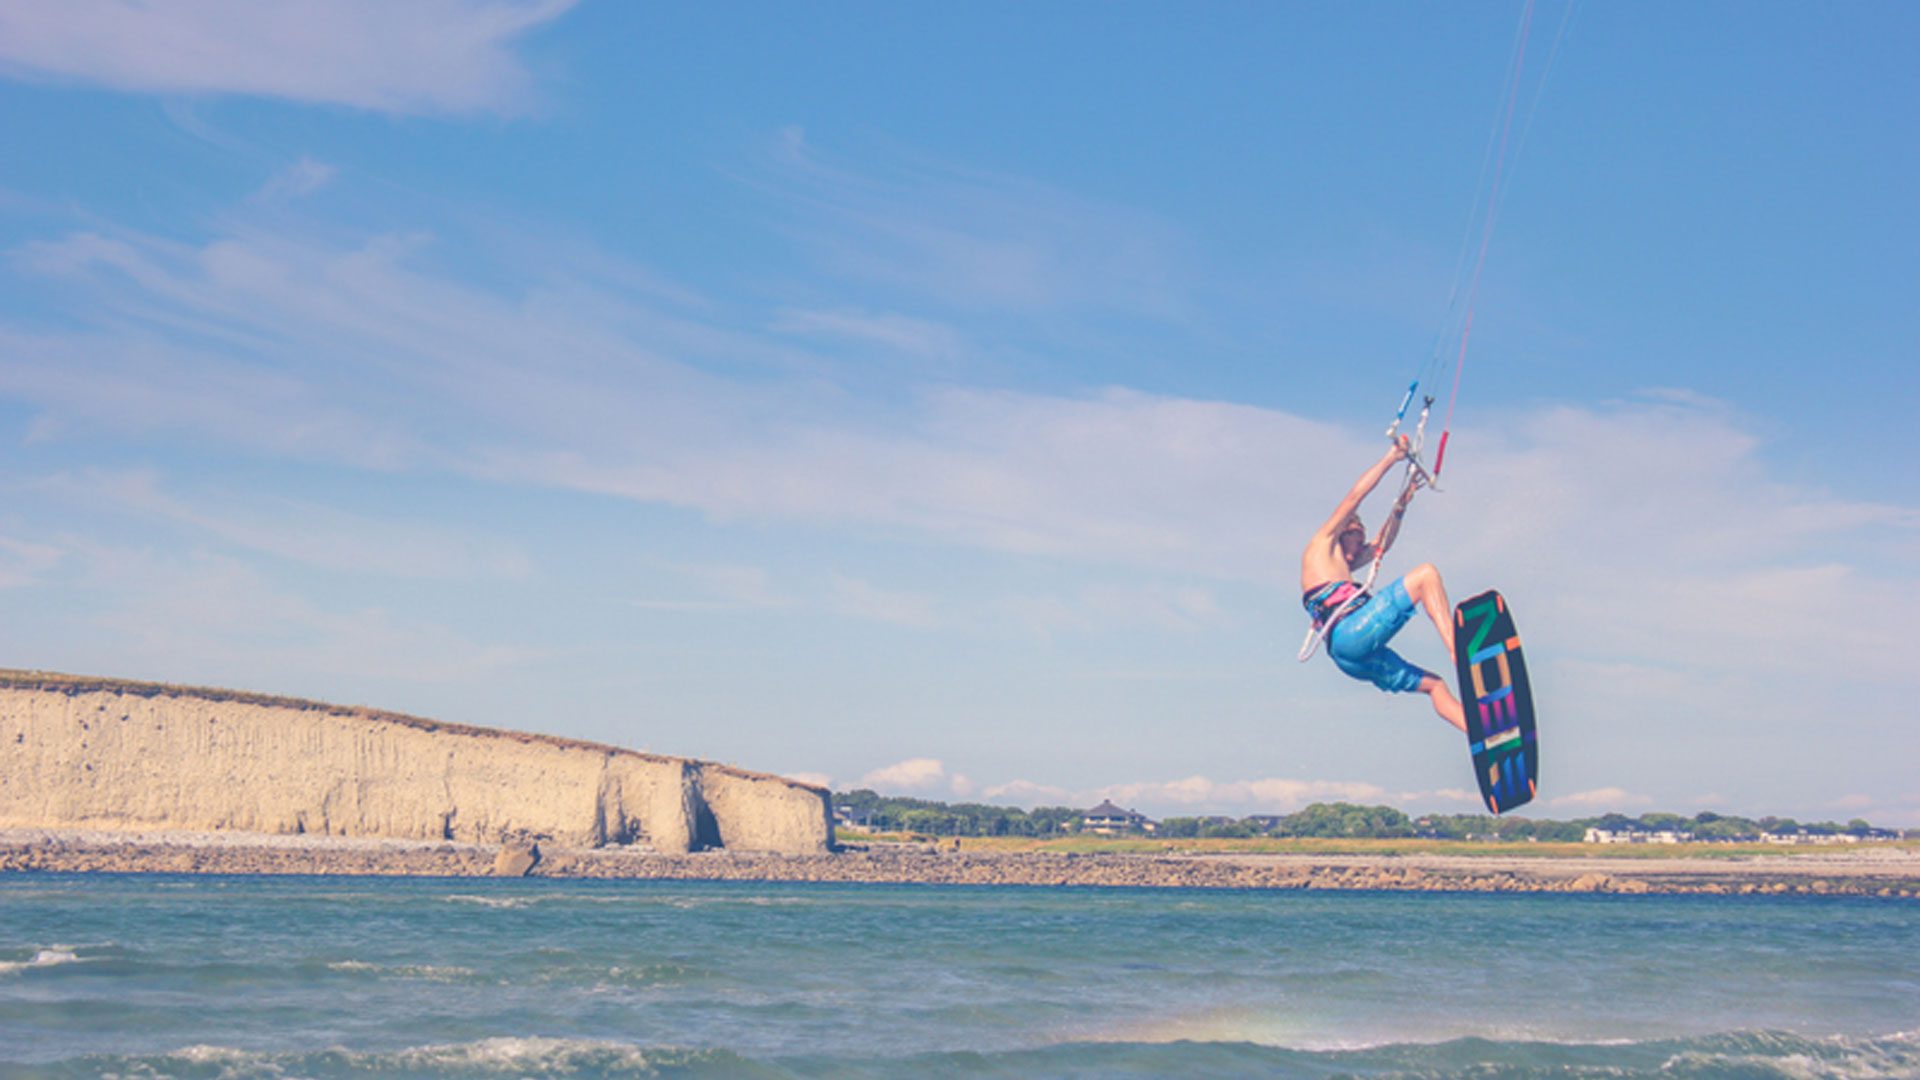 Kitesurfing in Galway Bay